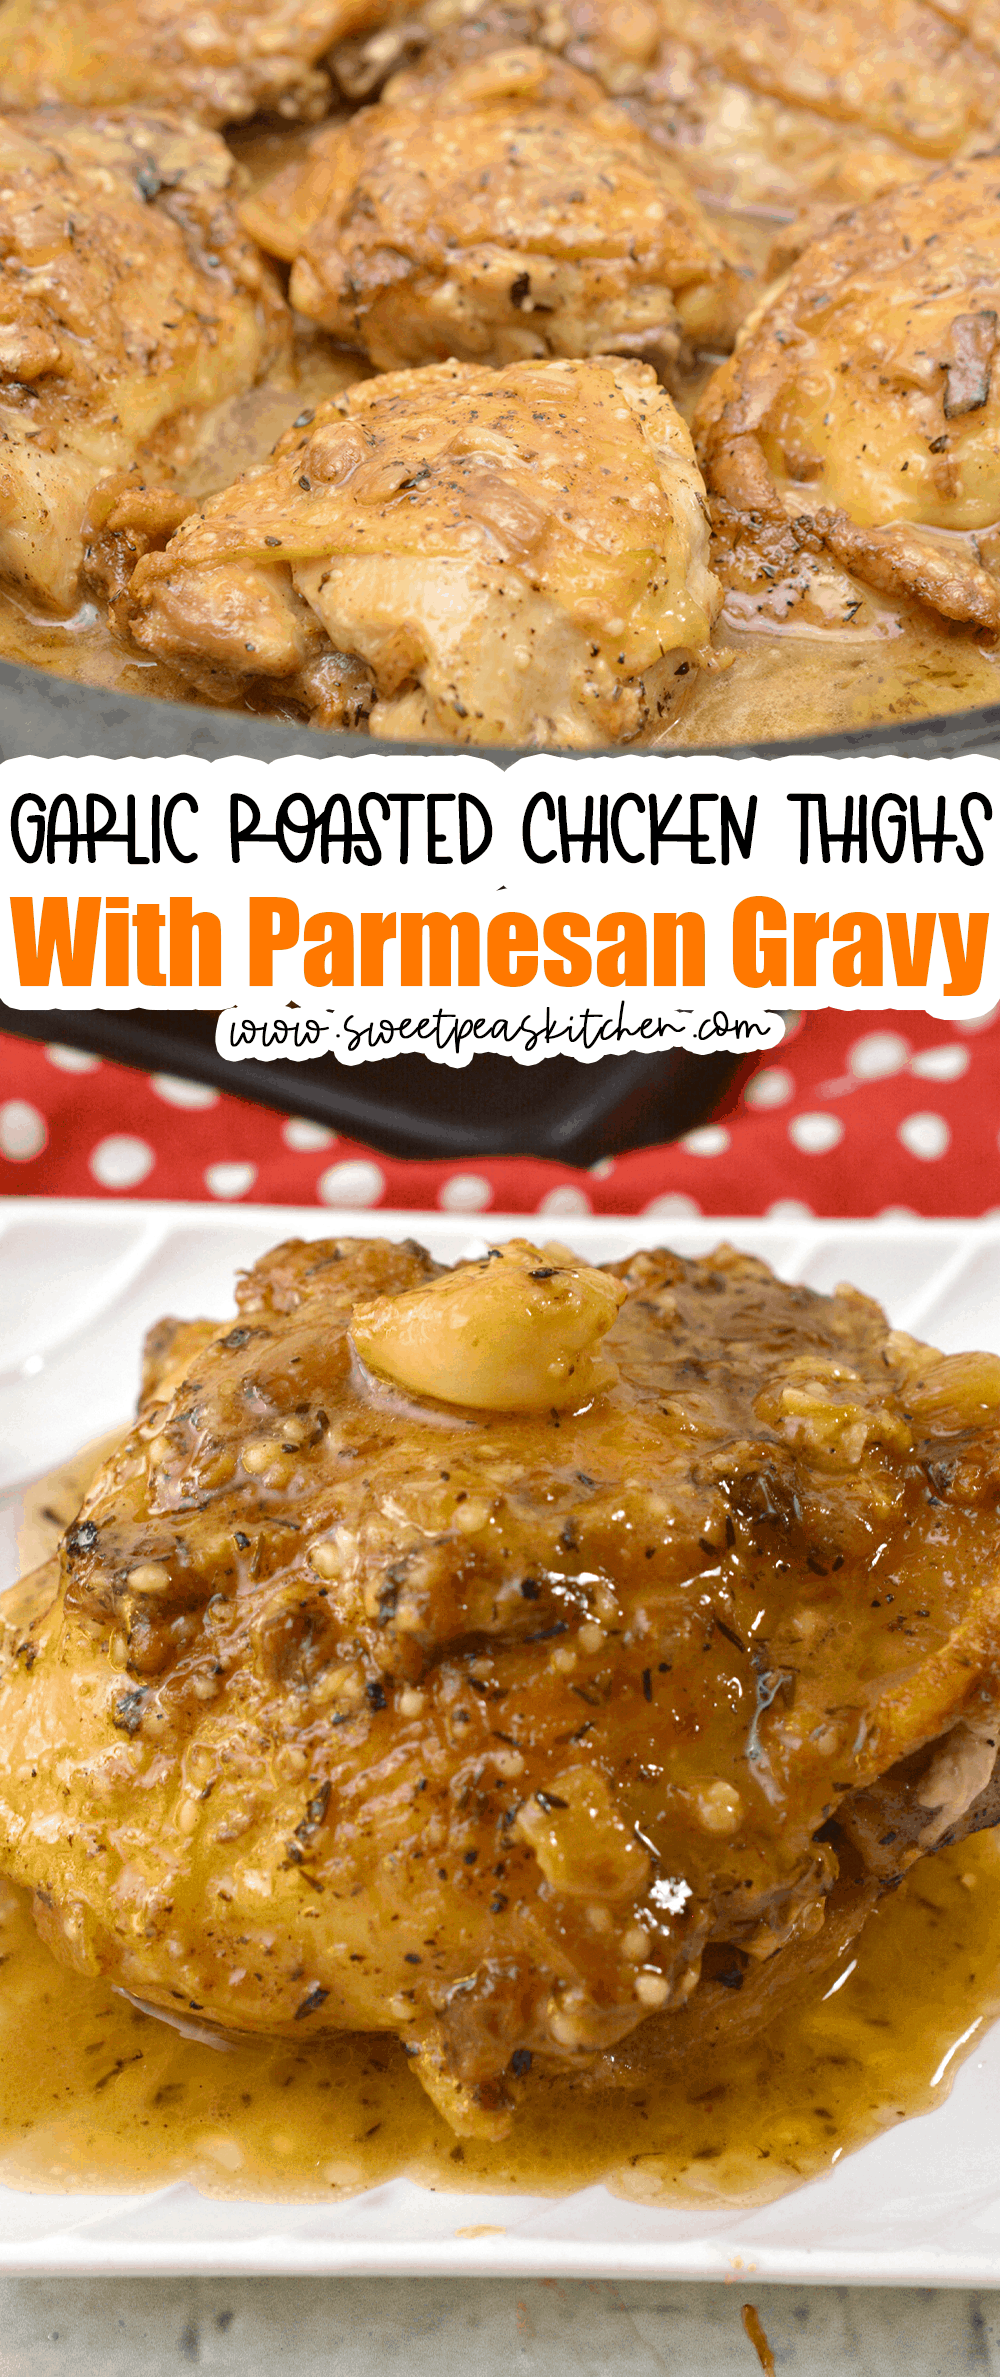 Keto Garlic Roasted Chicken Thighs with Parmesan Gravy